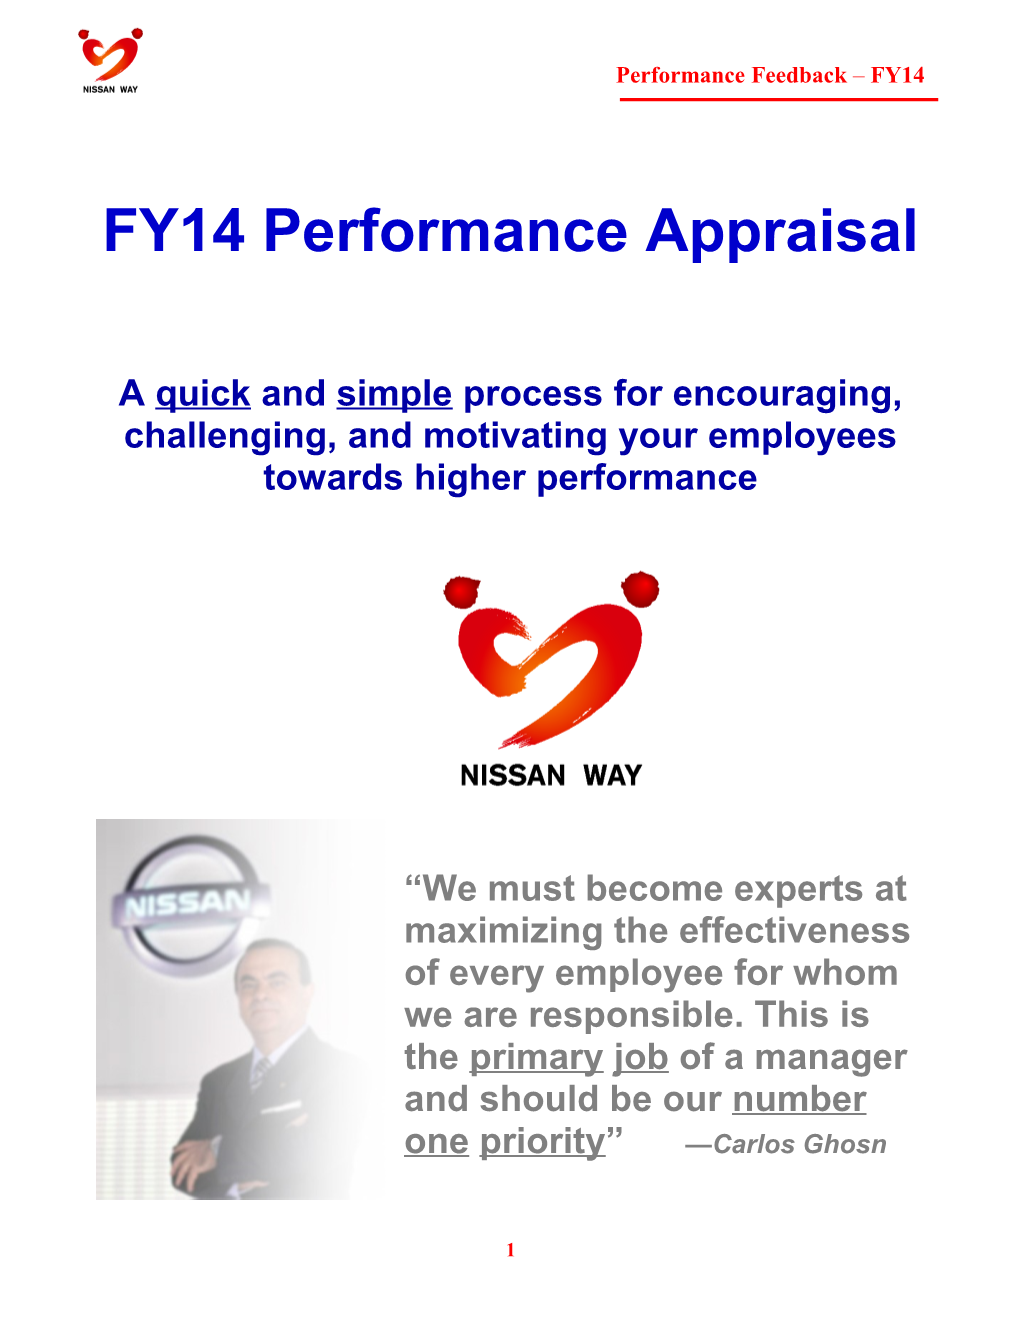 FY14 Performance Appraisal